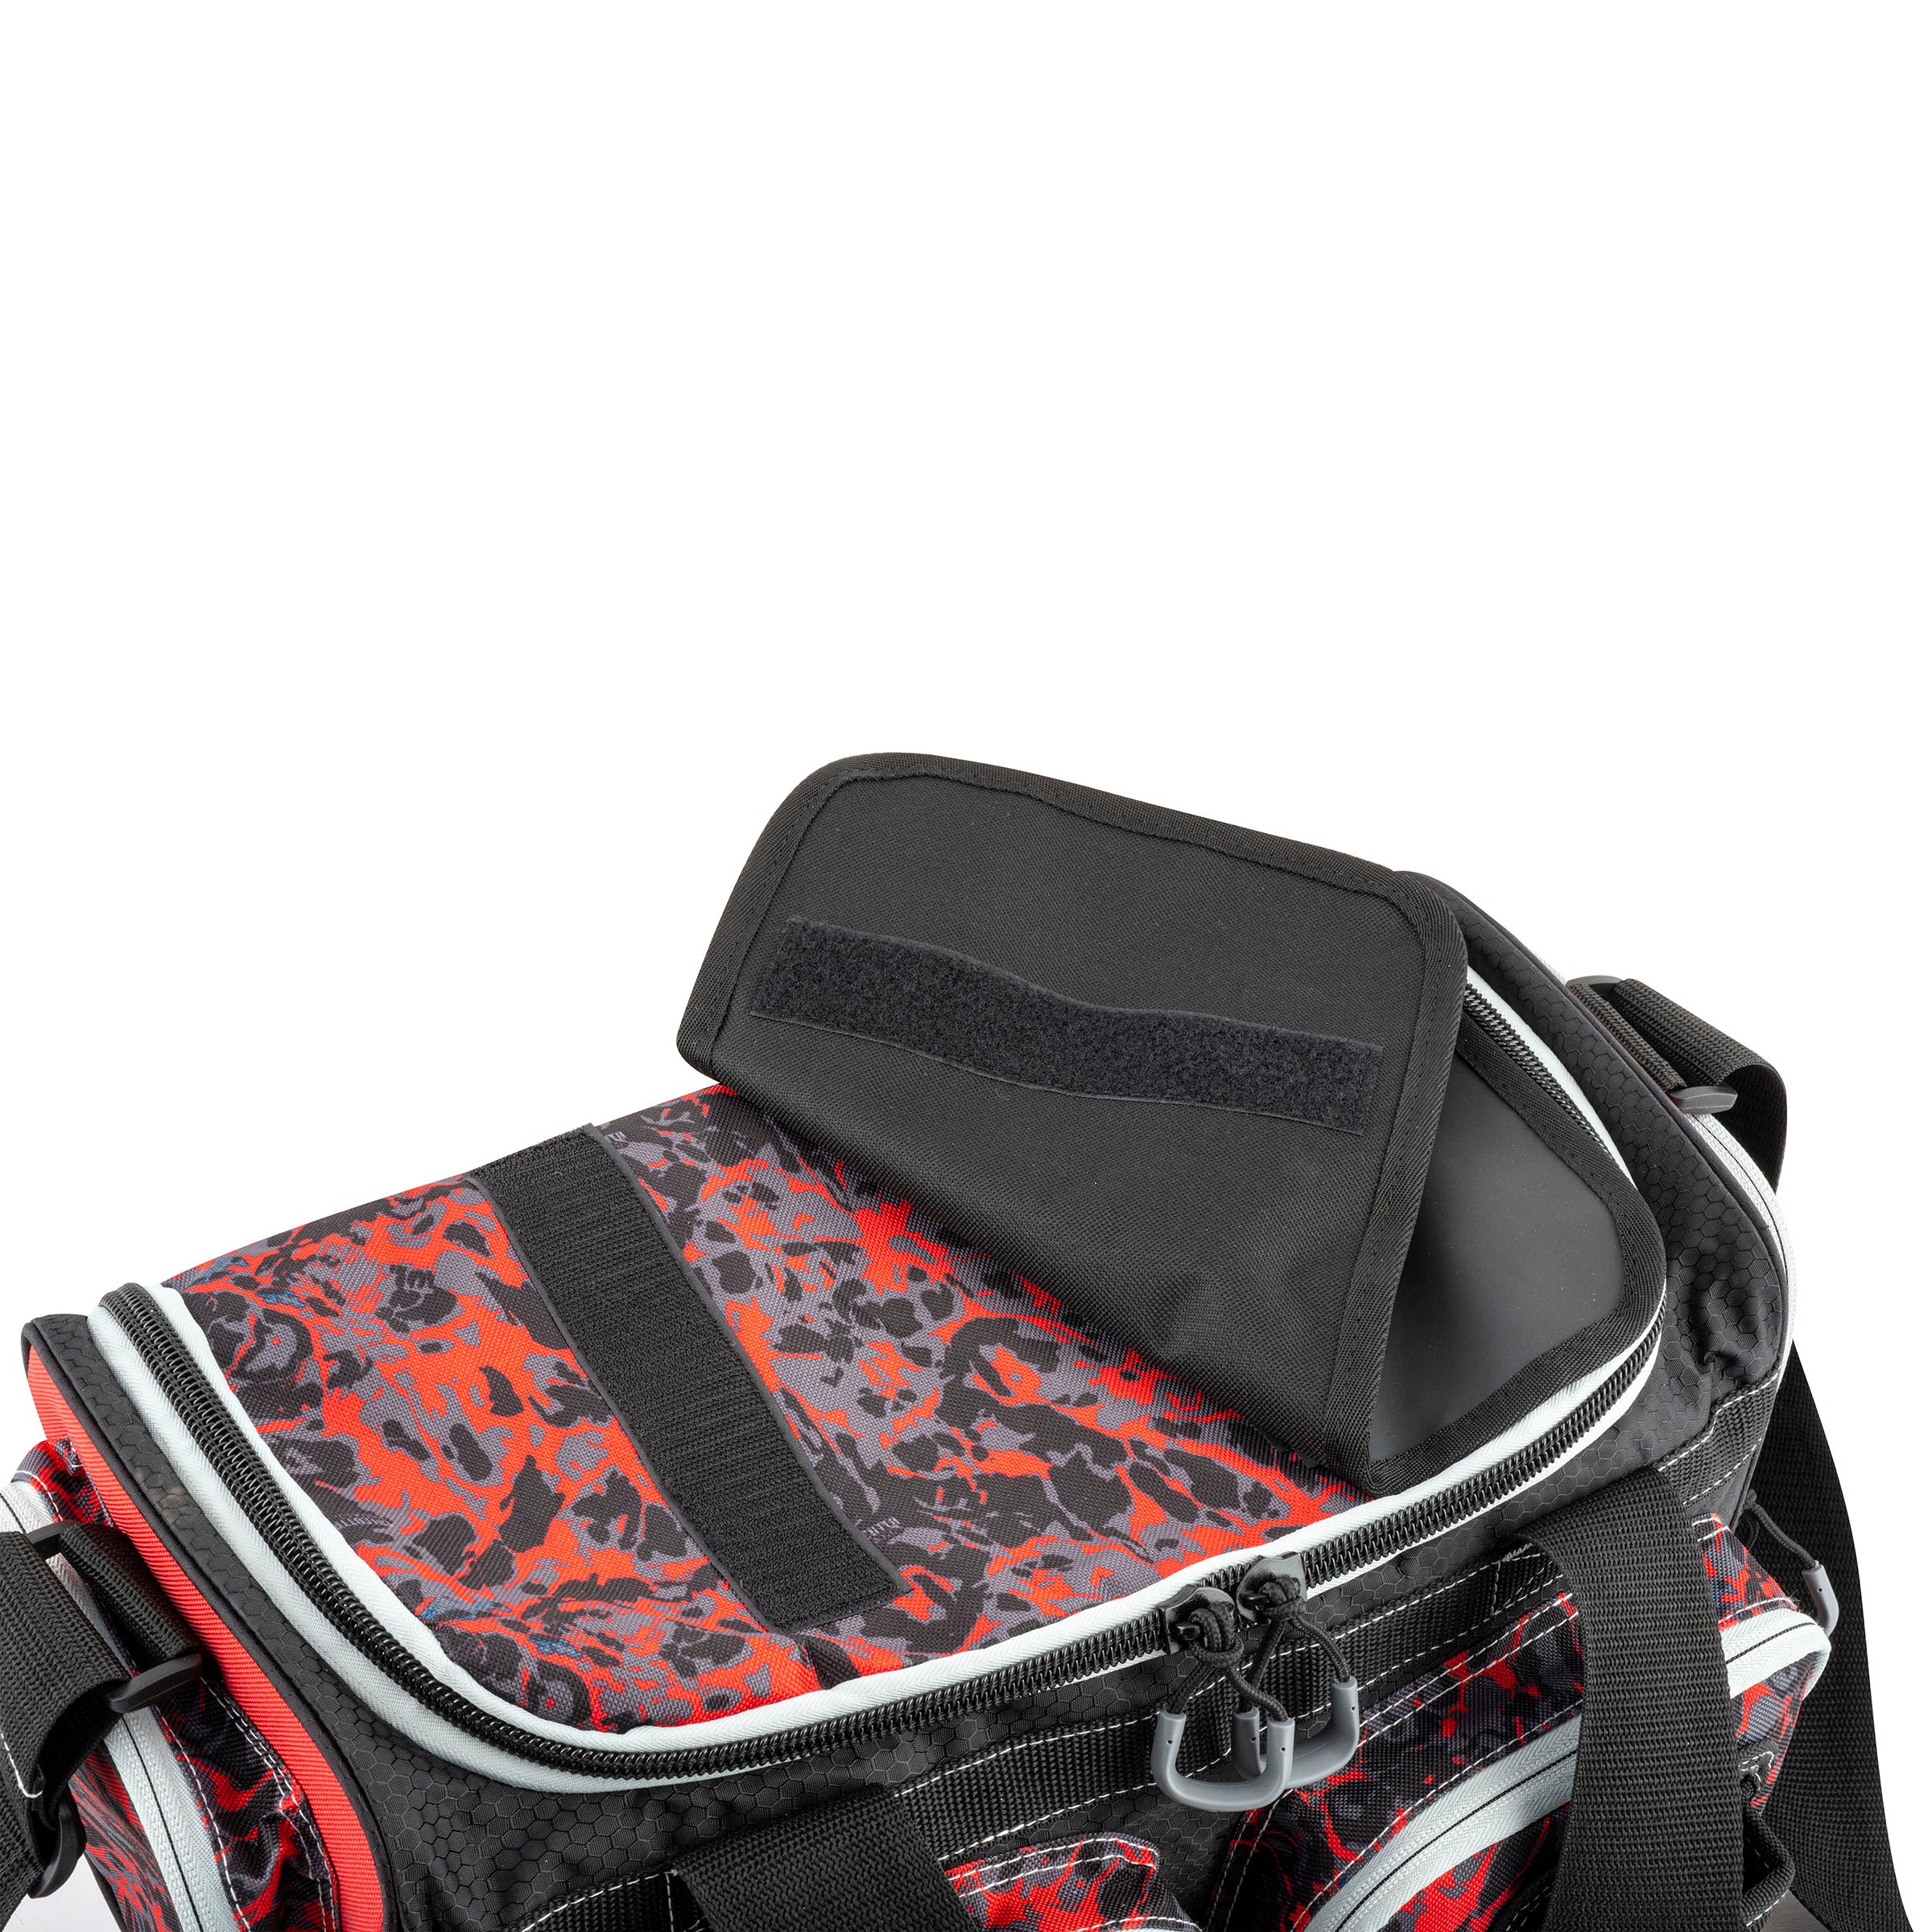 Matzuo MTZ-MTB37 3700 Soft SidesTackle Bag, 3 3700 Boxes, Magnetic